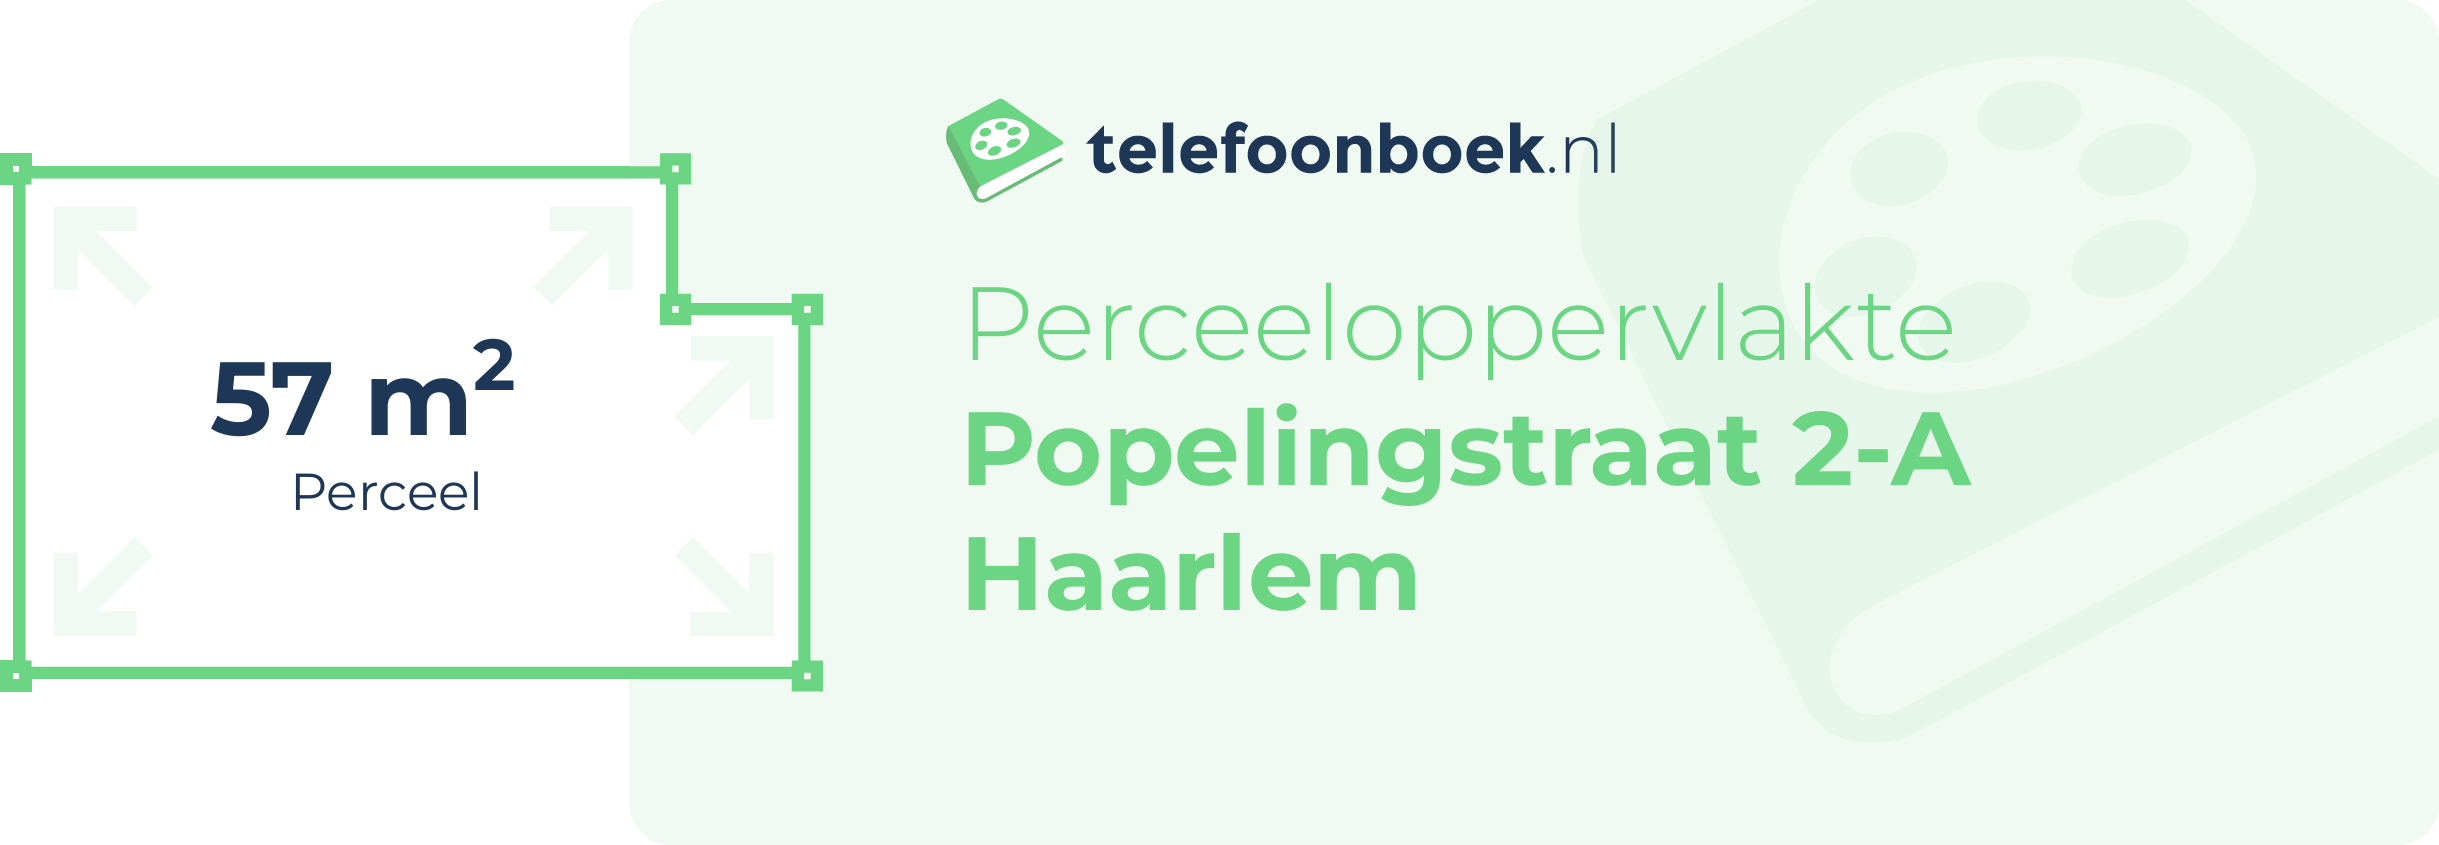 Perceeloppervlakte Popelingstraat 2-A Haarlem